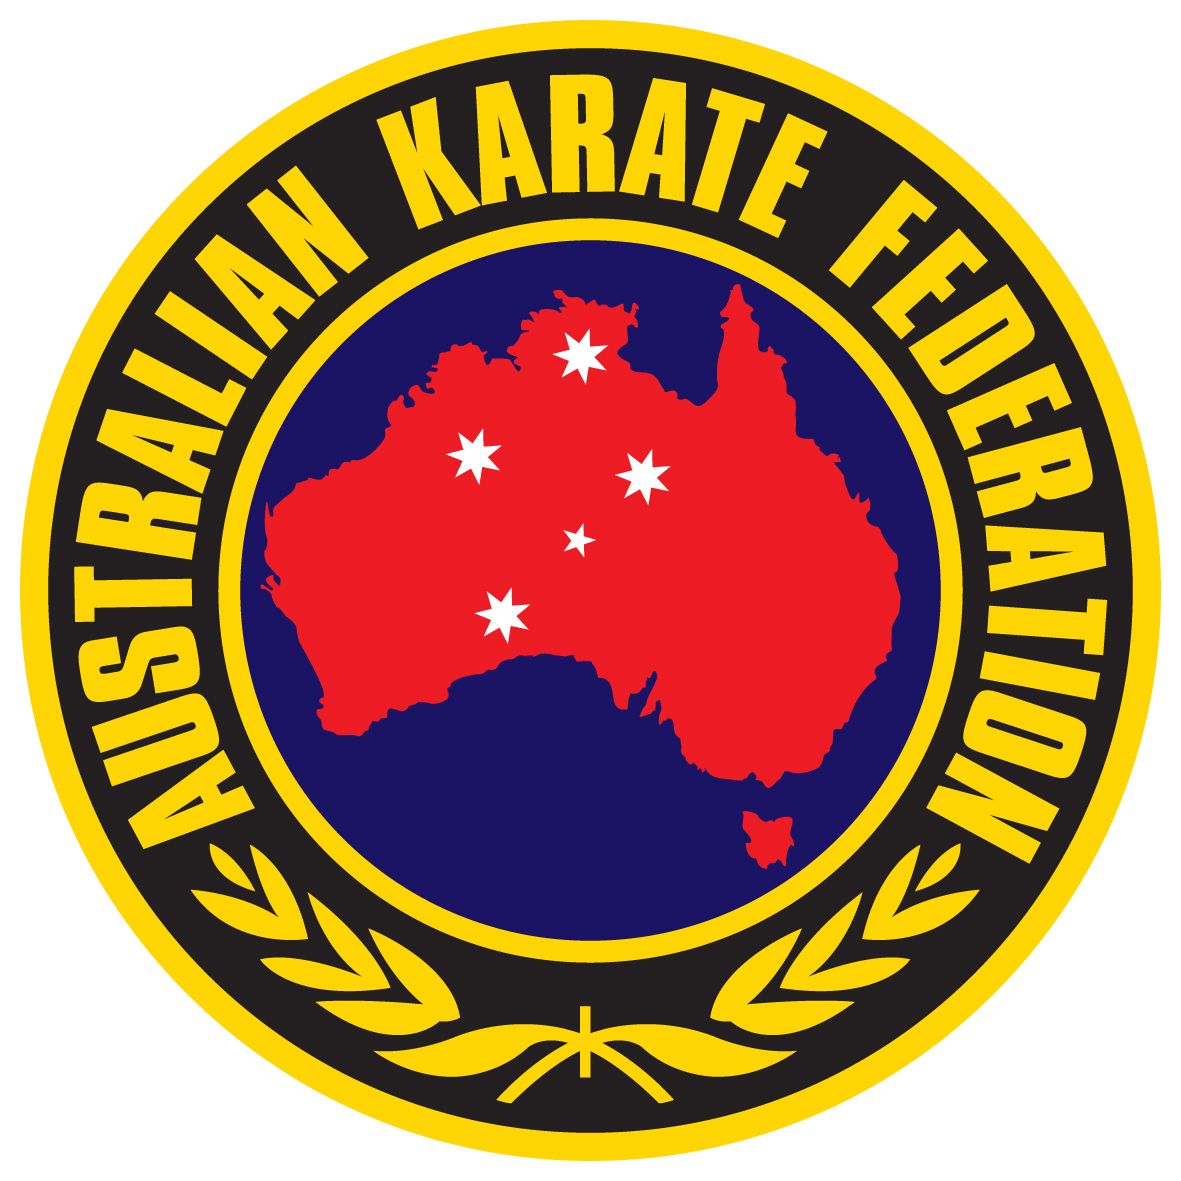 Australian Karate Federation